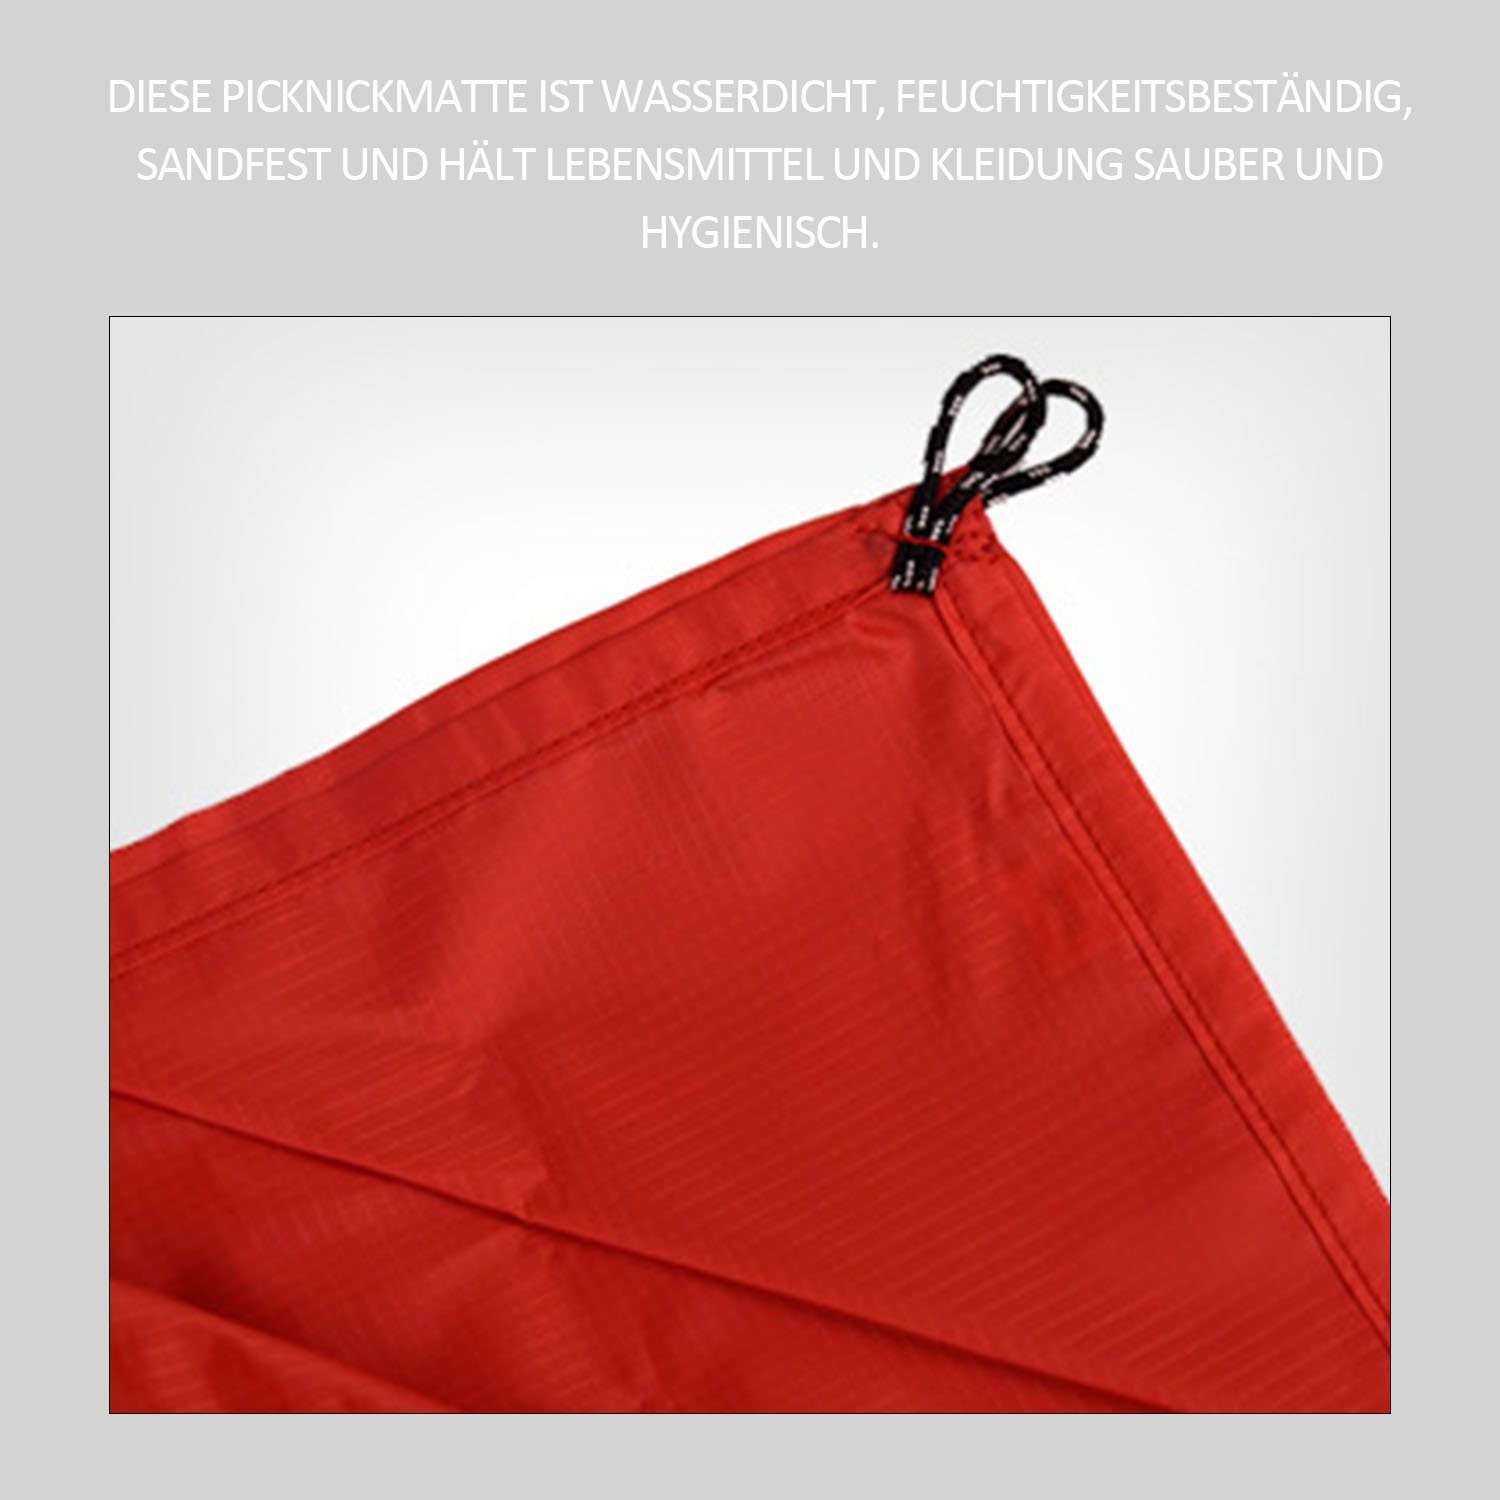 Mini Picknickdecke Wasserabweisende Rot Faltbare & 3-Größen MAGICSHE verfügbar, Picknickdecke